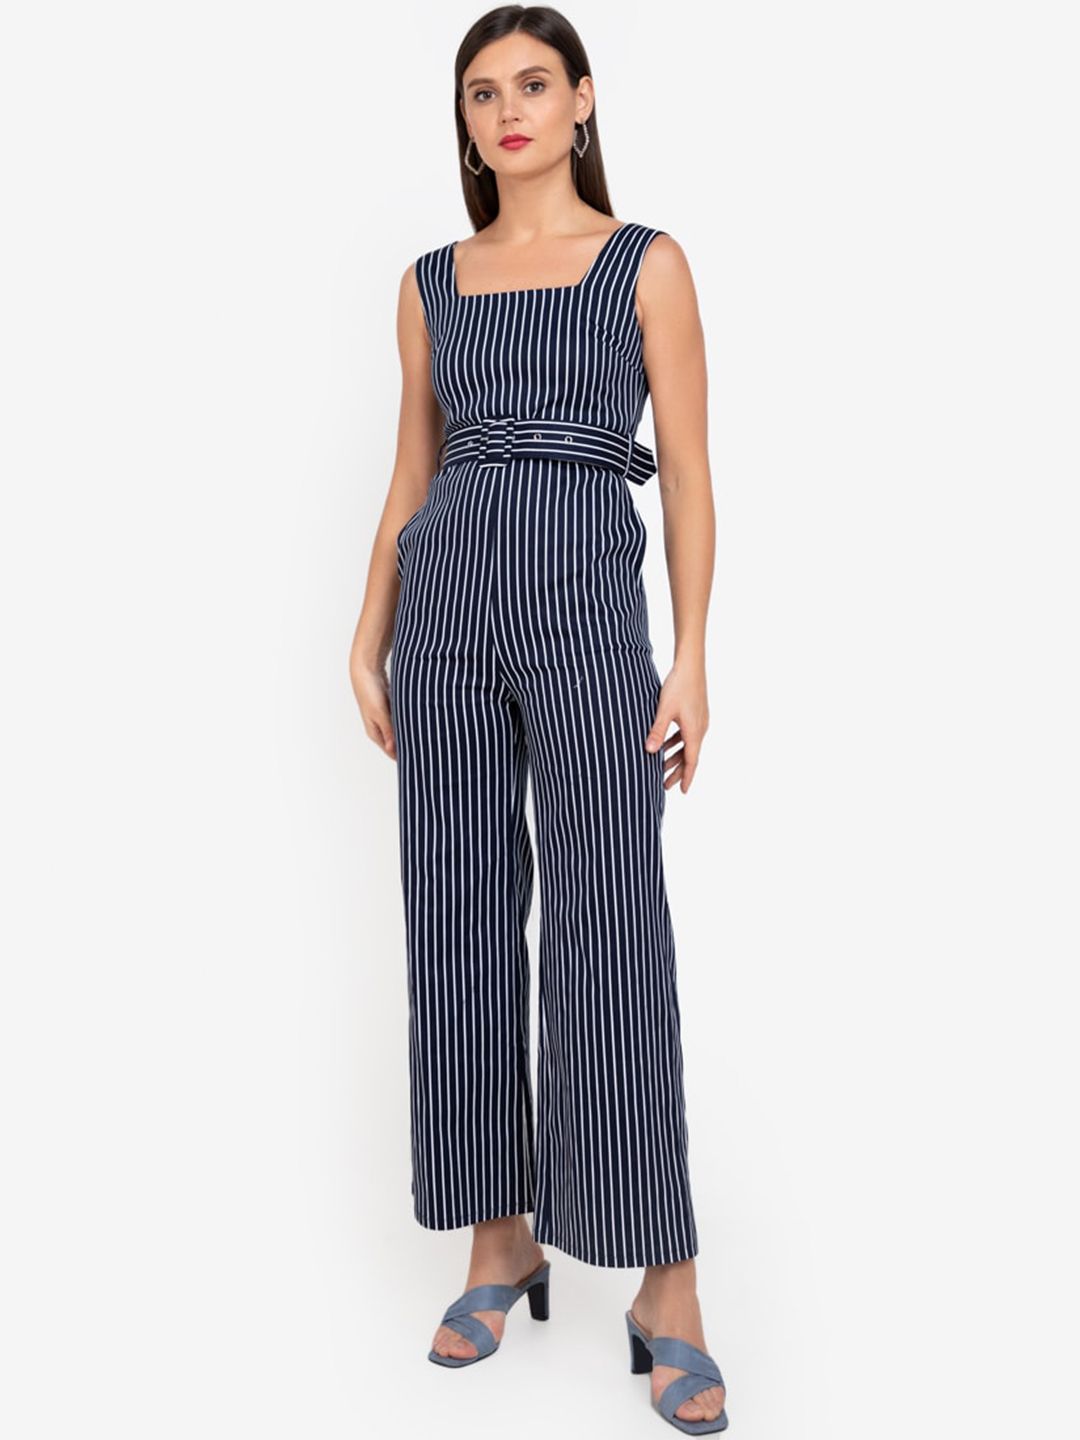 ZALORA WORK Blue & White Striped Culotte Jumpsuit Price in India